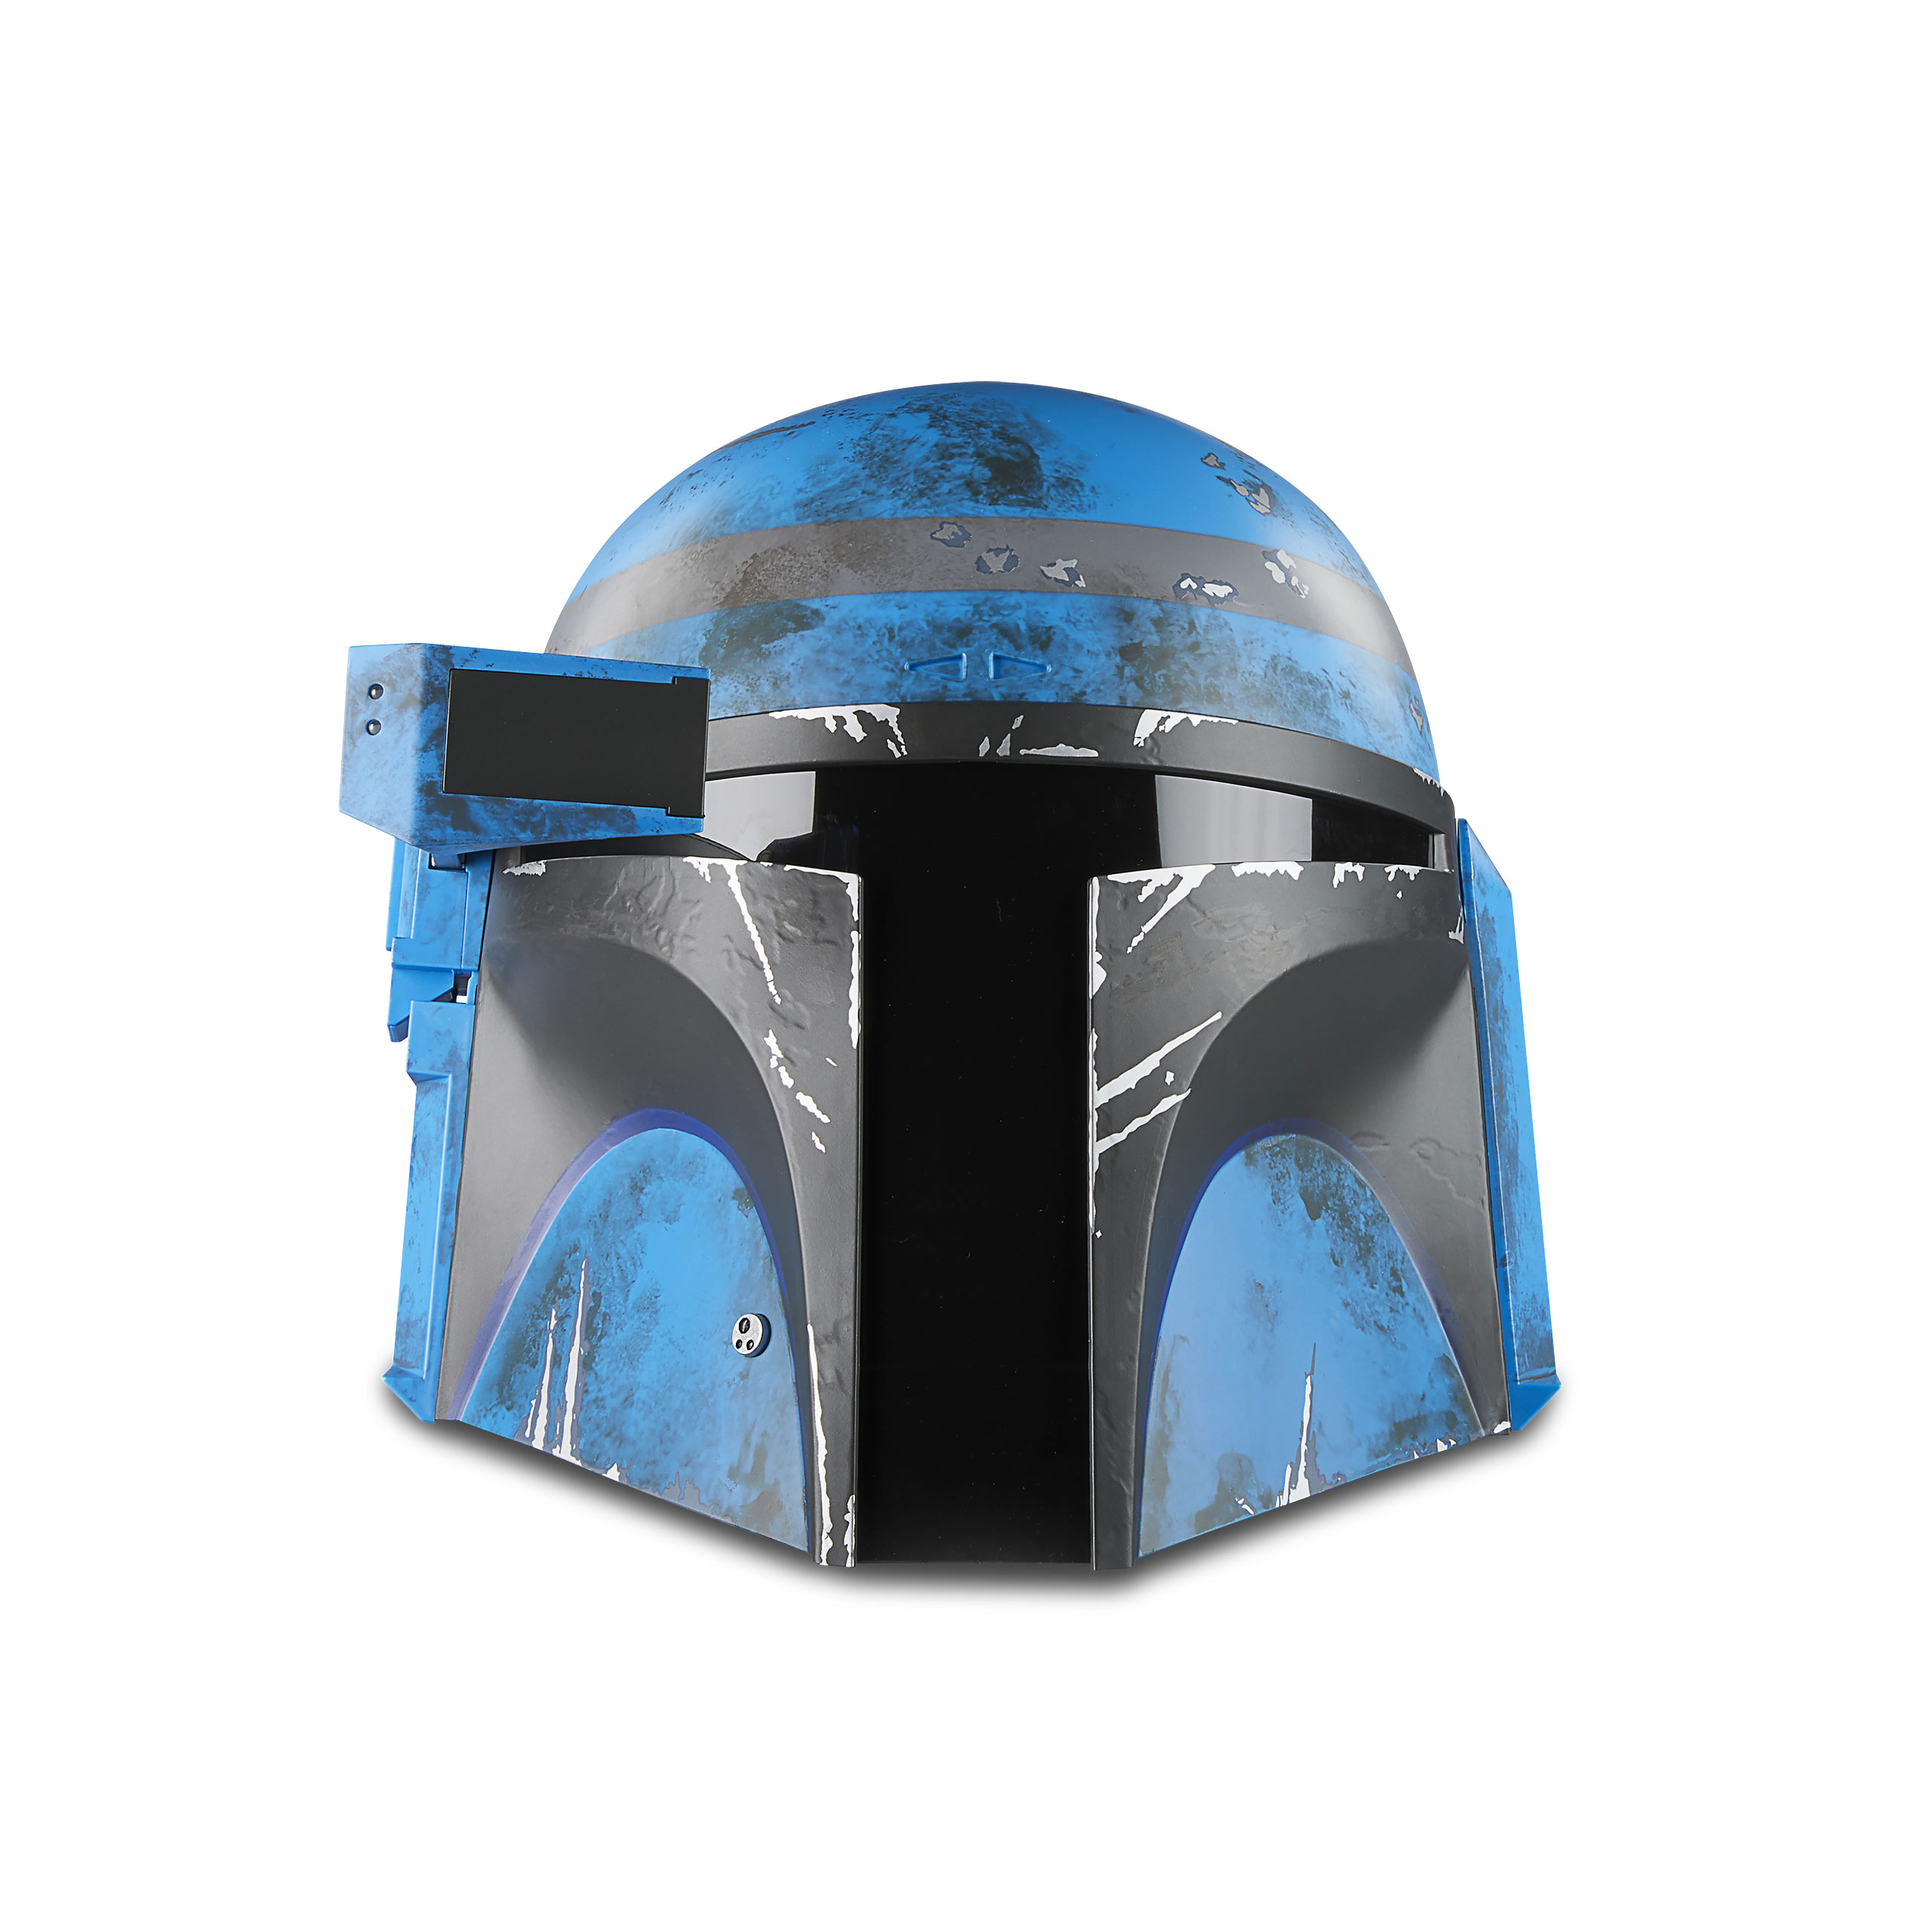 Axe Woves Black Series Premium Helm - Star Wars The Mandalorian